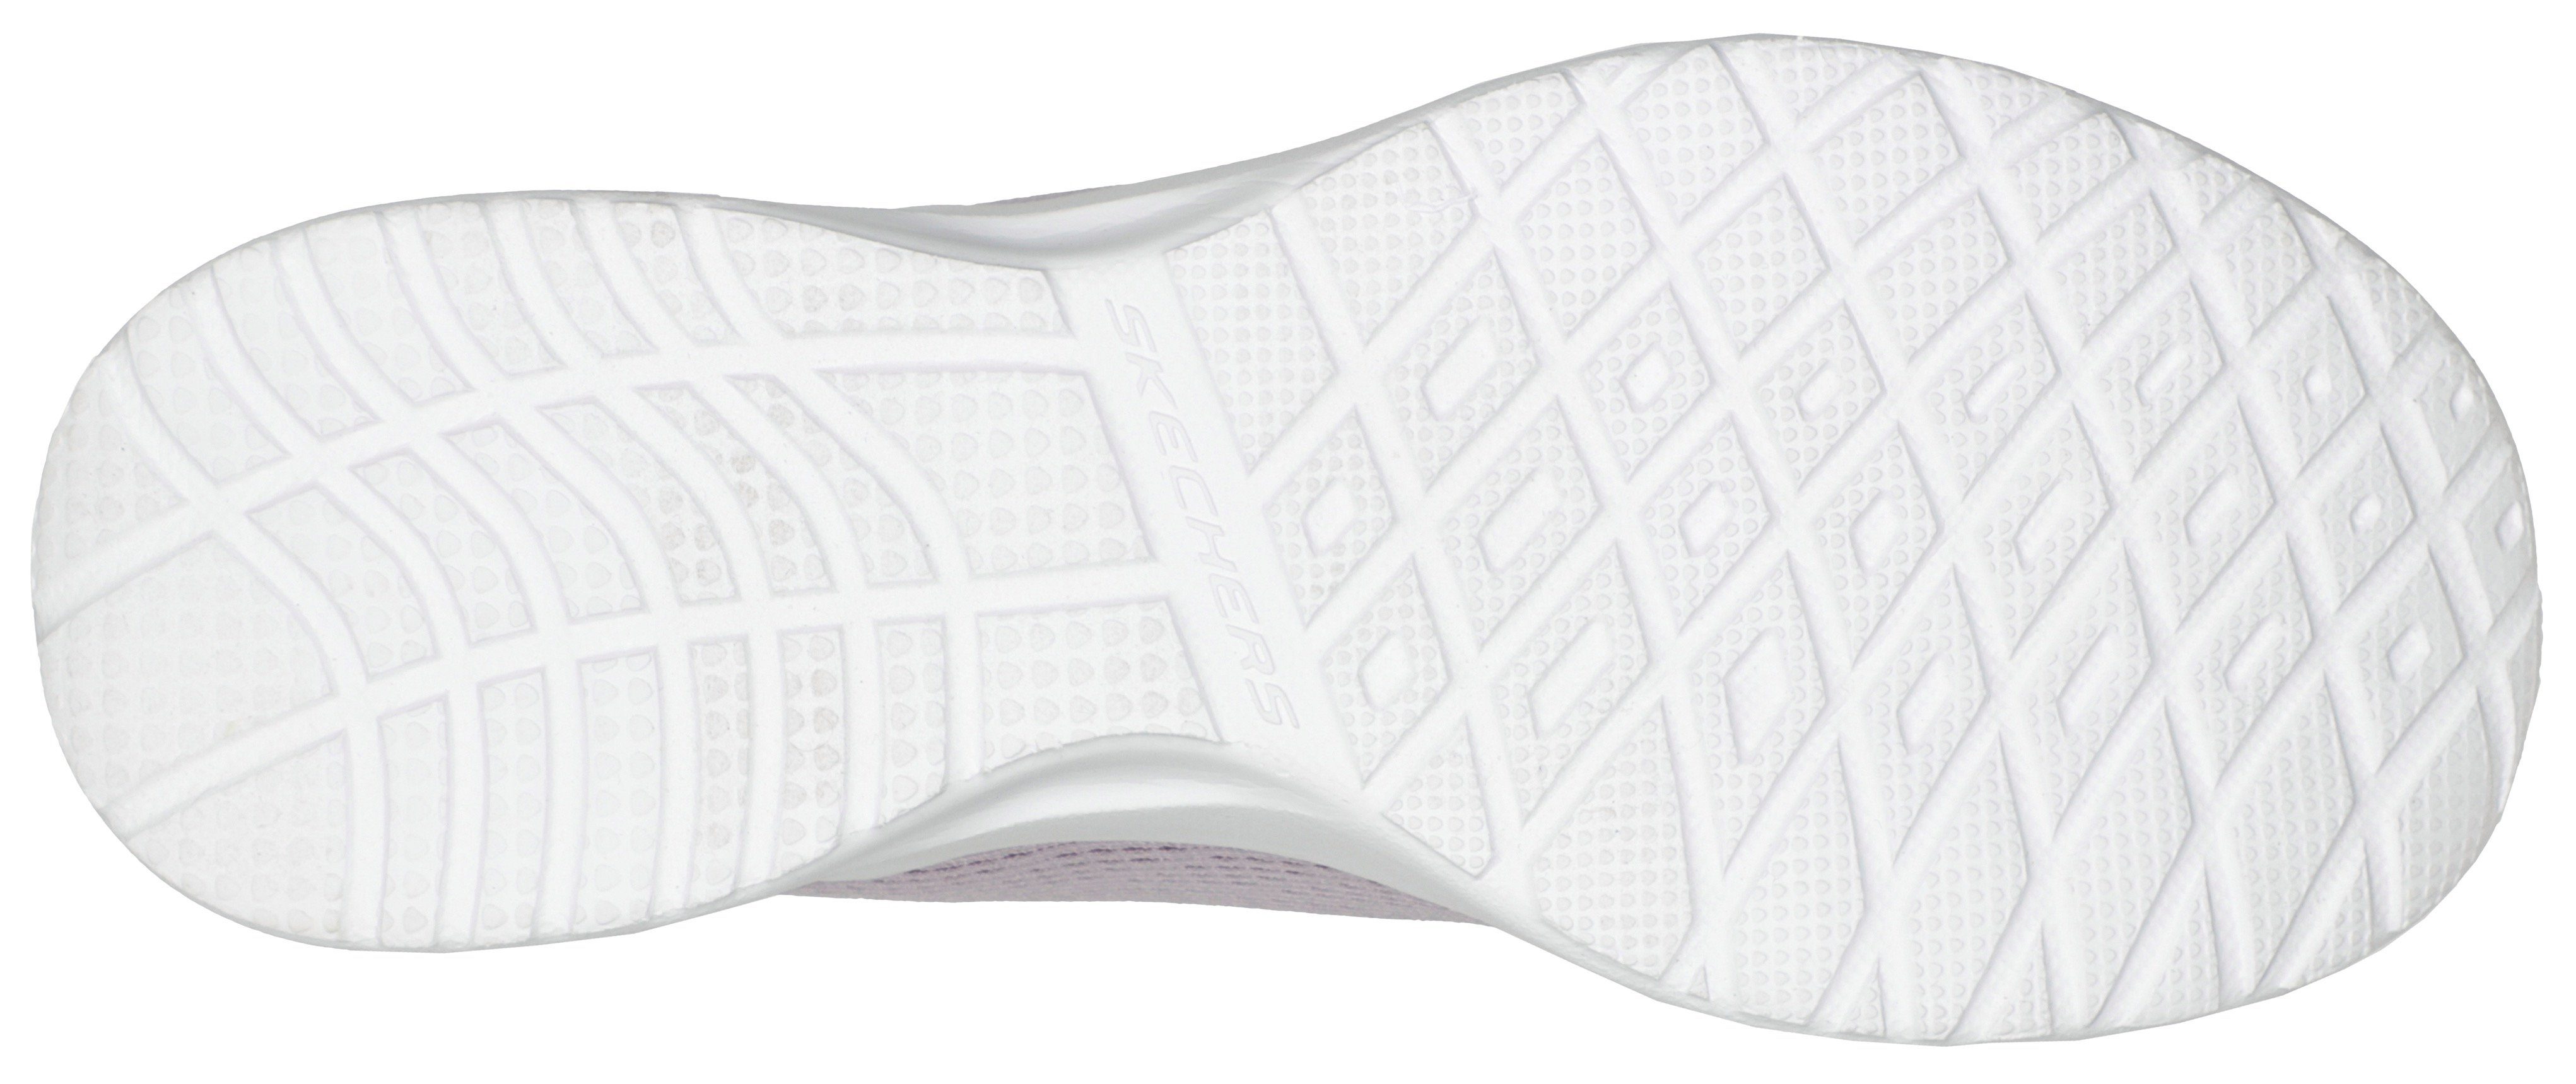 Skechers SKECH-AIR DYNAMIGHT an Sneaker Print der OUT LAID lavendel-kombiniert Ferse mit buntem